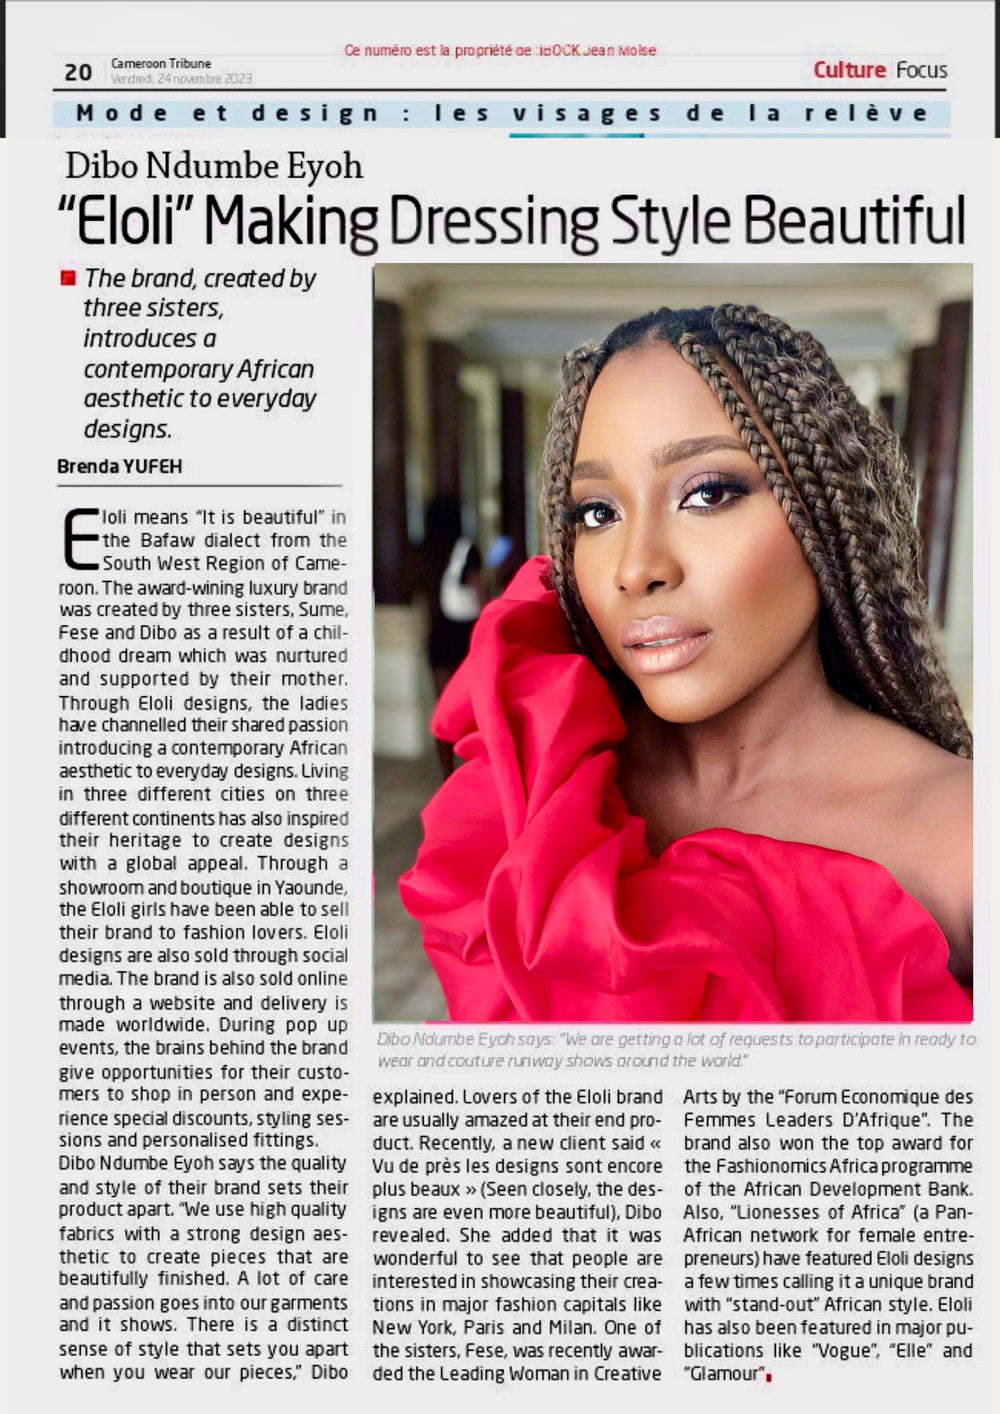 Cameroon Tribune: Eloli making style beautiful